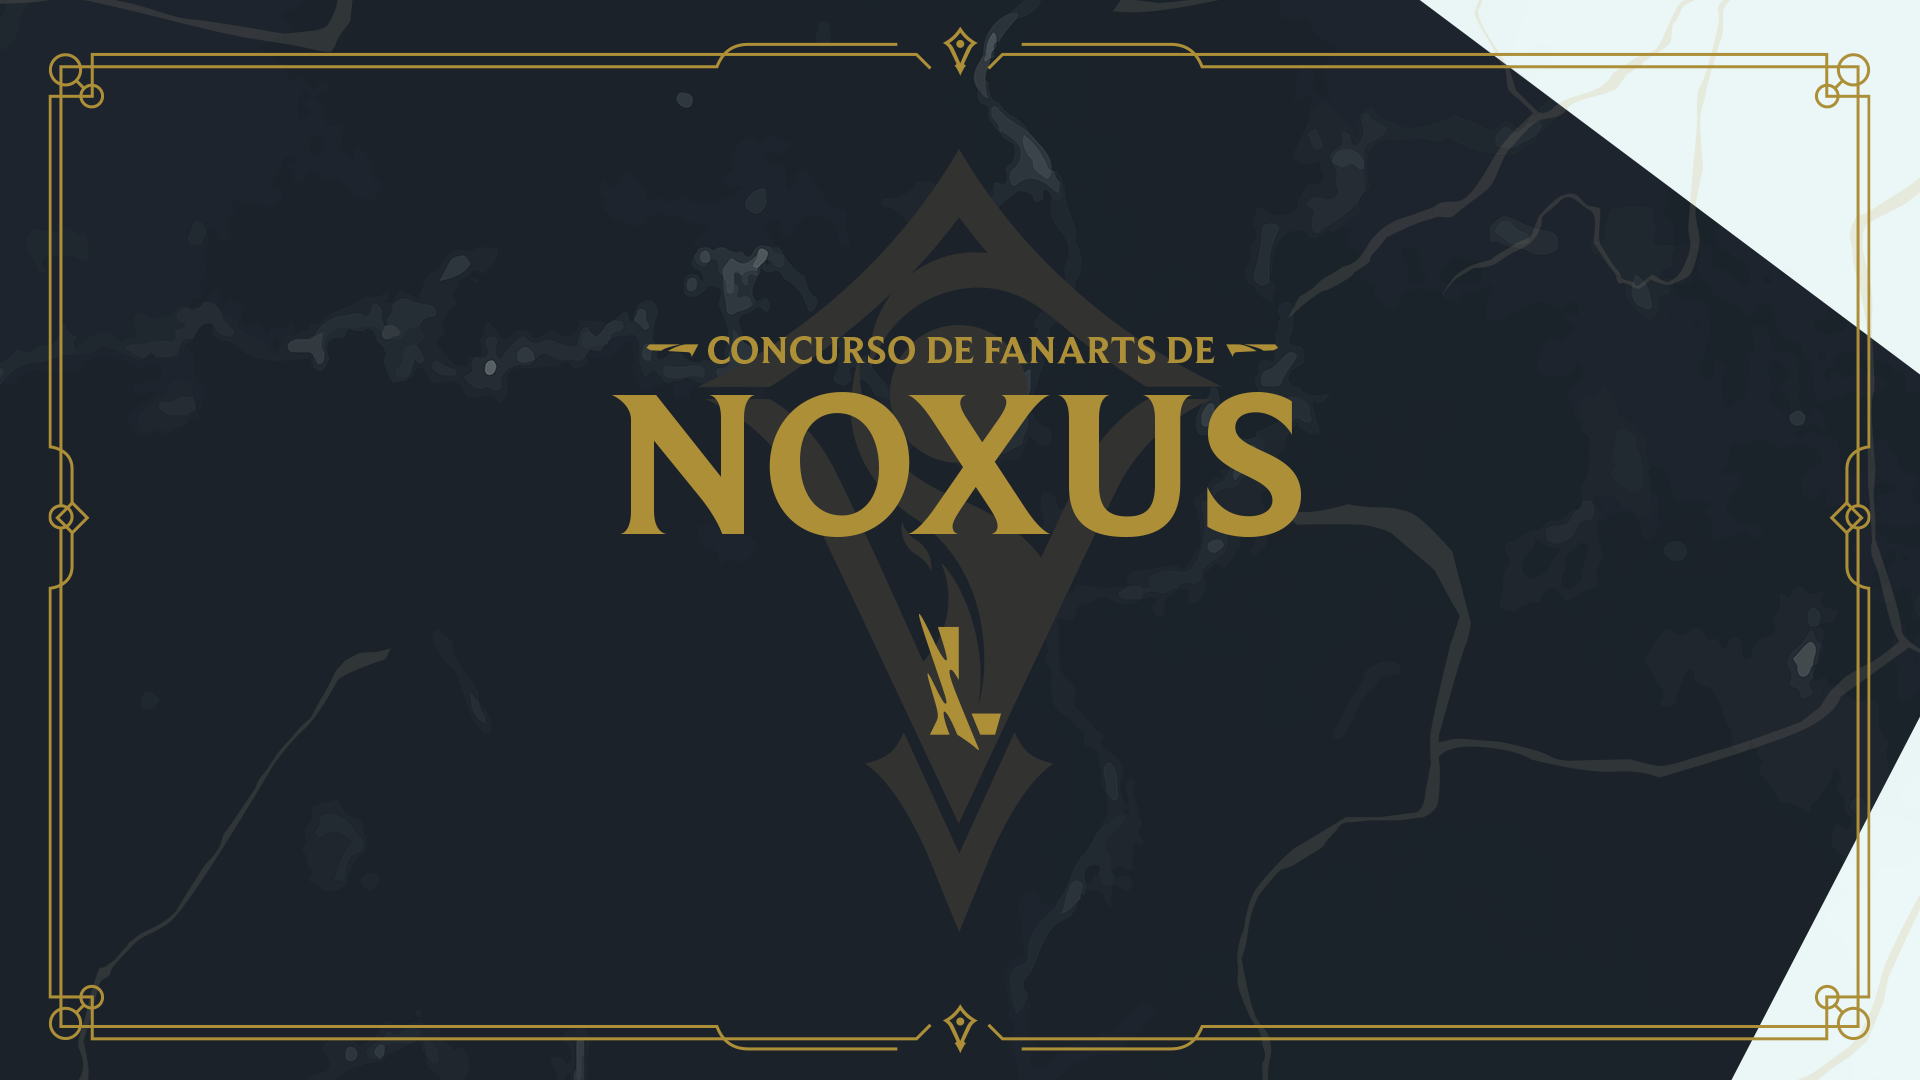 Resultado Concurso de Fanarts de Noxus 2021 - League of Legends e Wild Rift